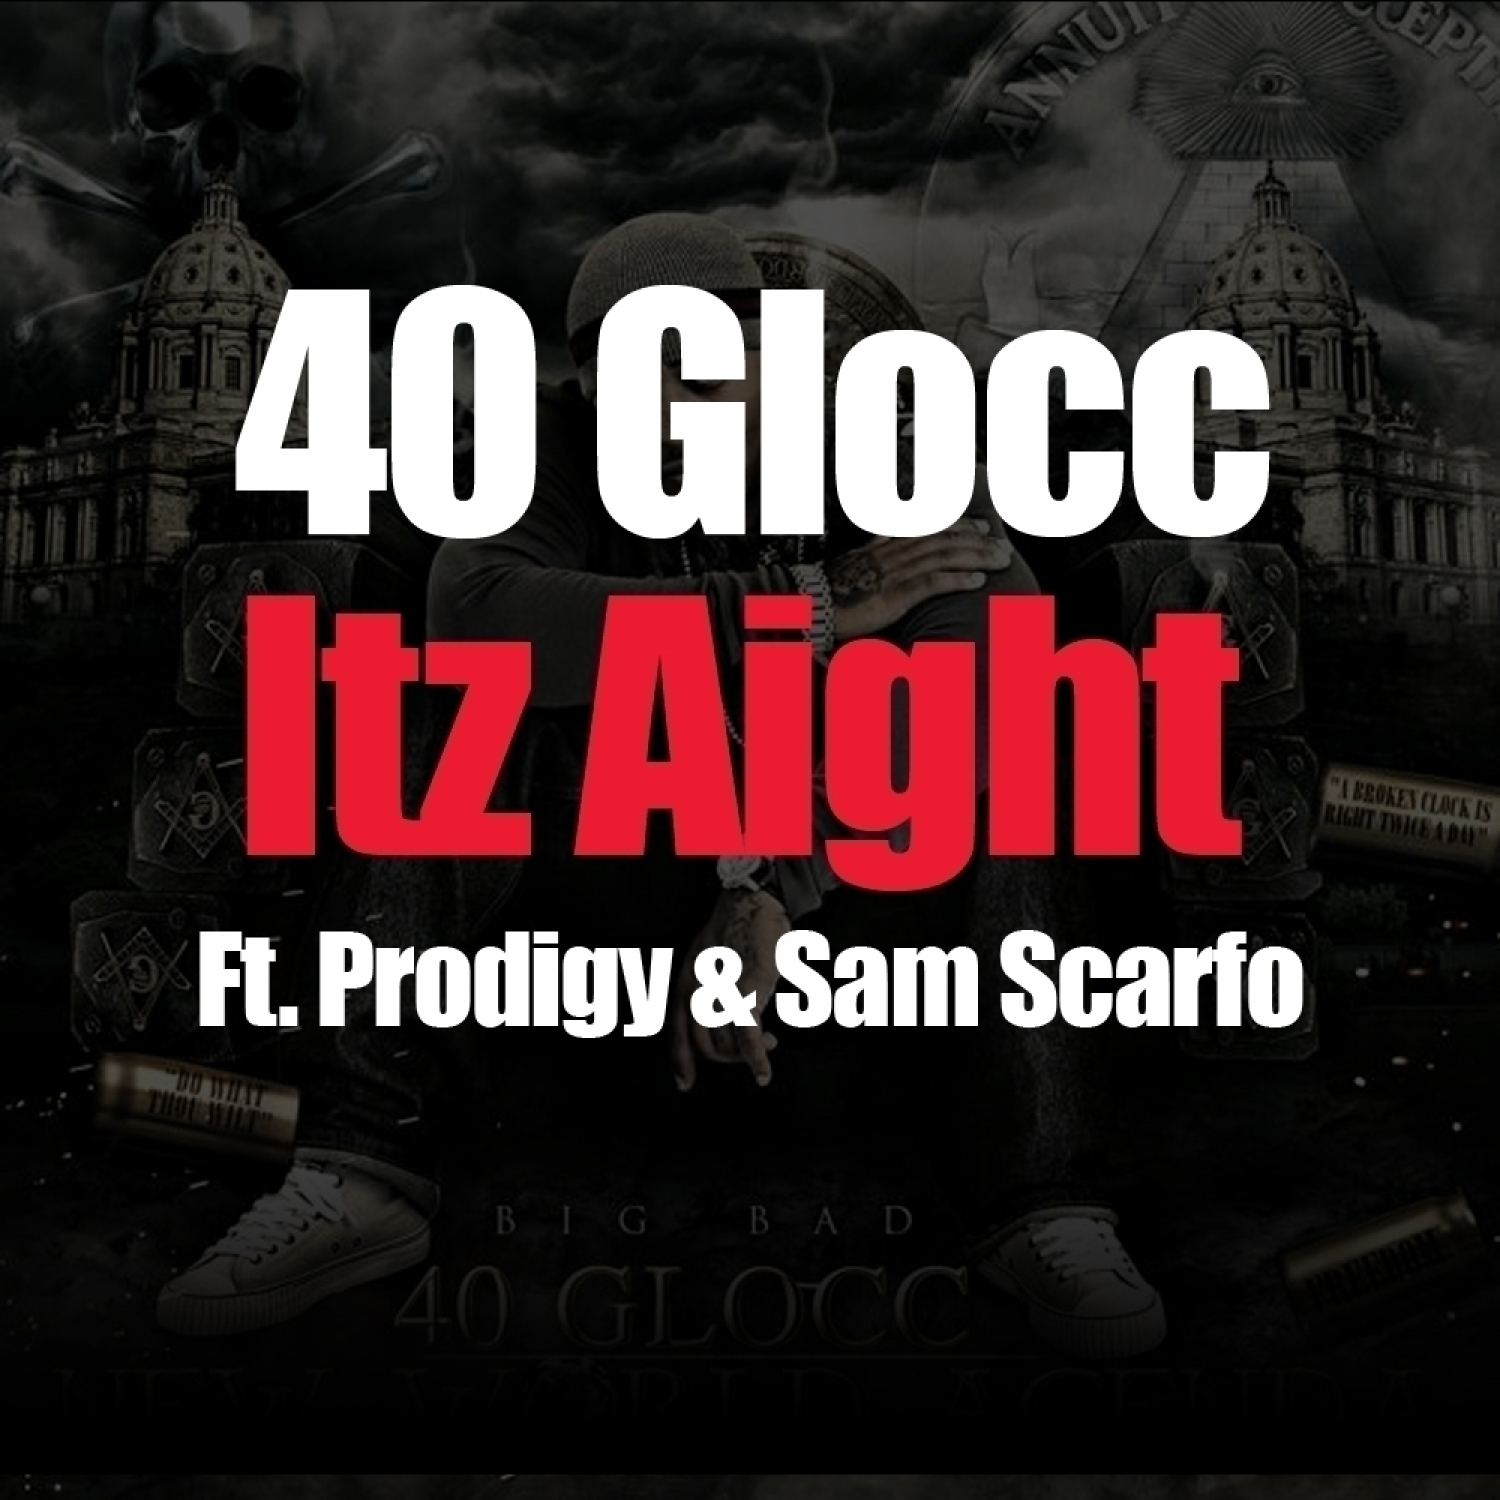 Itz Aight (feat. Prodigy & Sam Scarfo) - Single